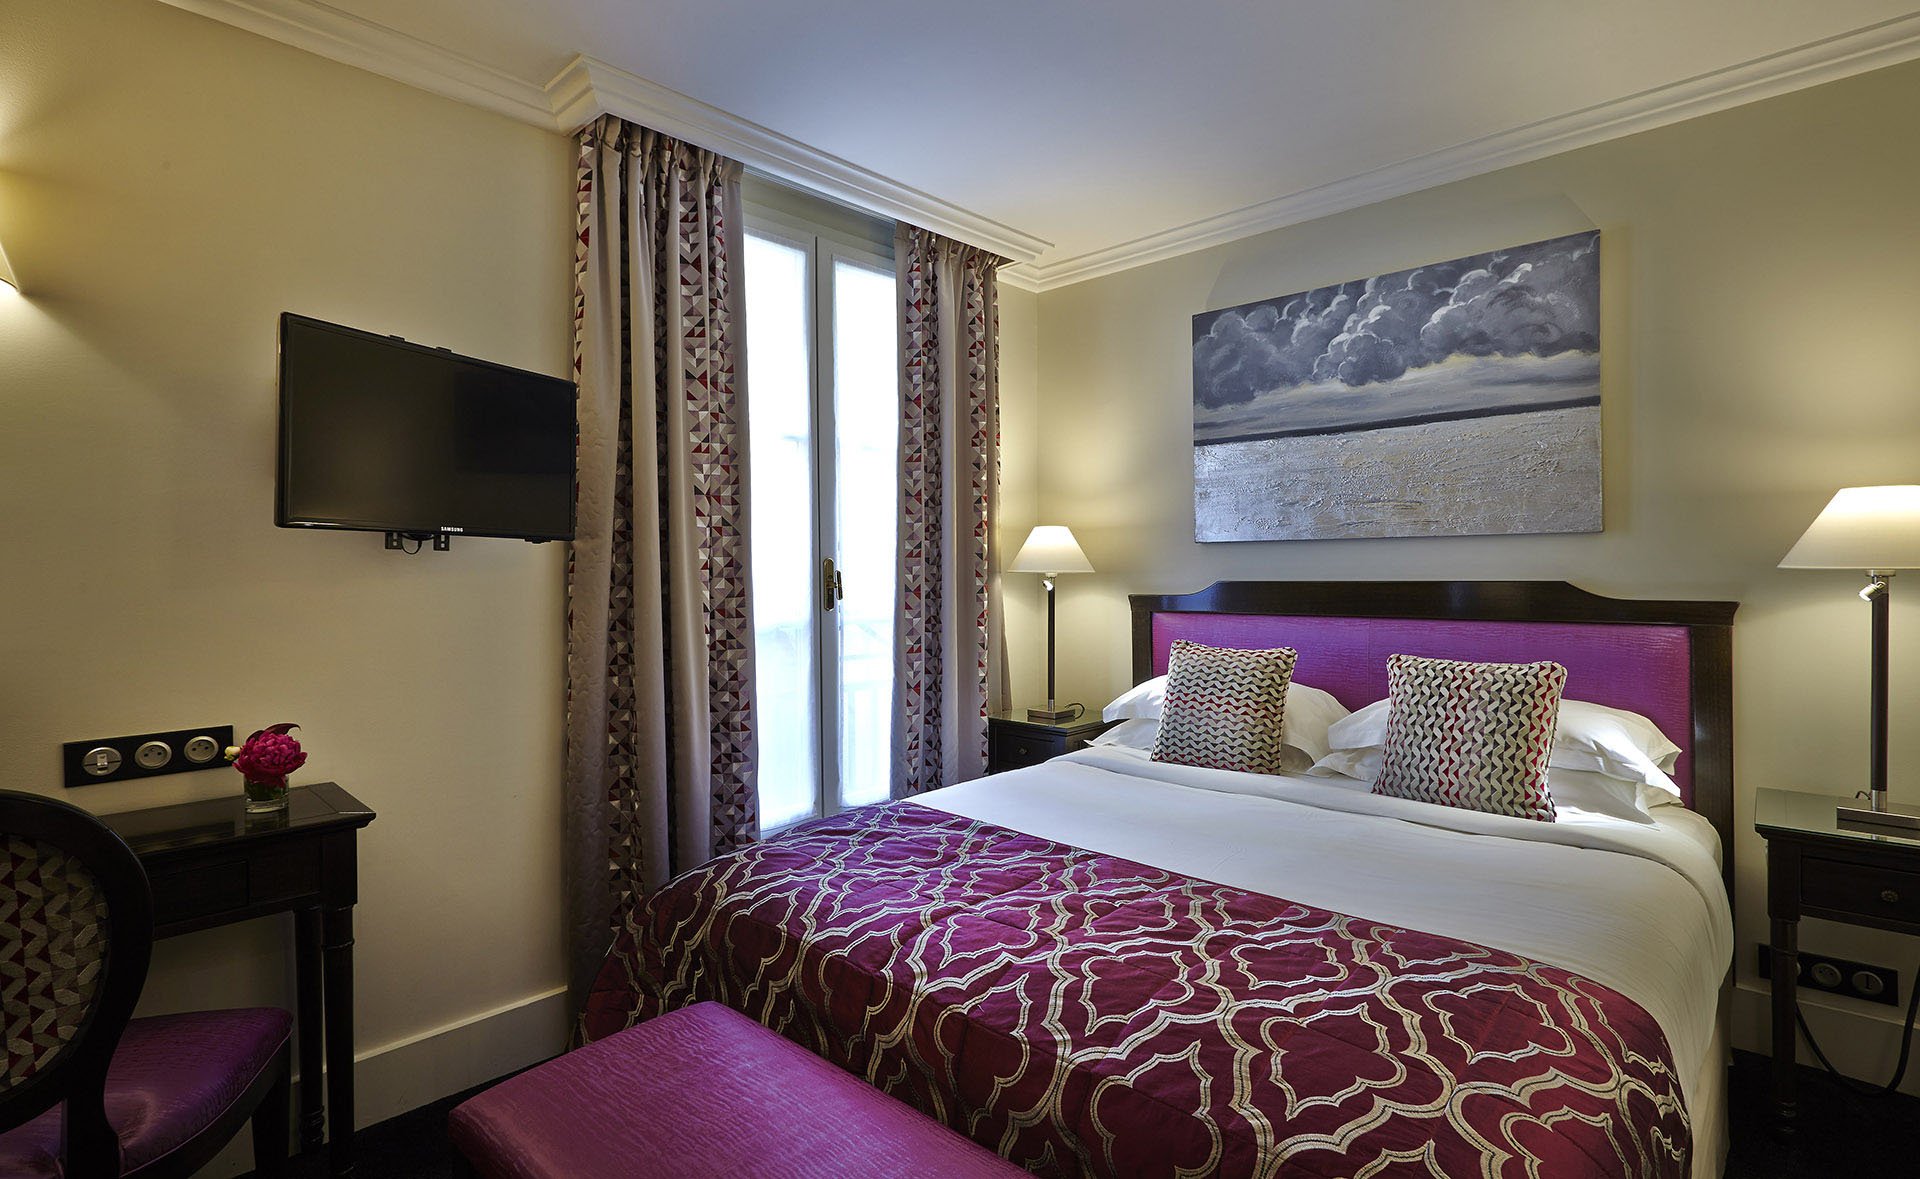 Classic Room, Hotel Paris rue Saint Honoré, 4 star hotel Paris Louvre Vendôme, 4 star hotel Saint Honoré